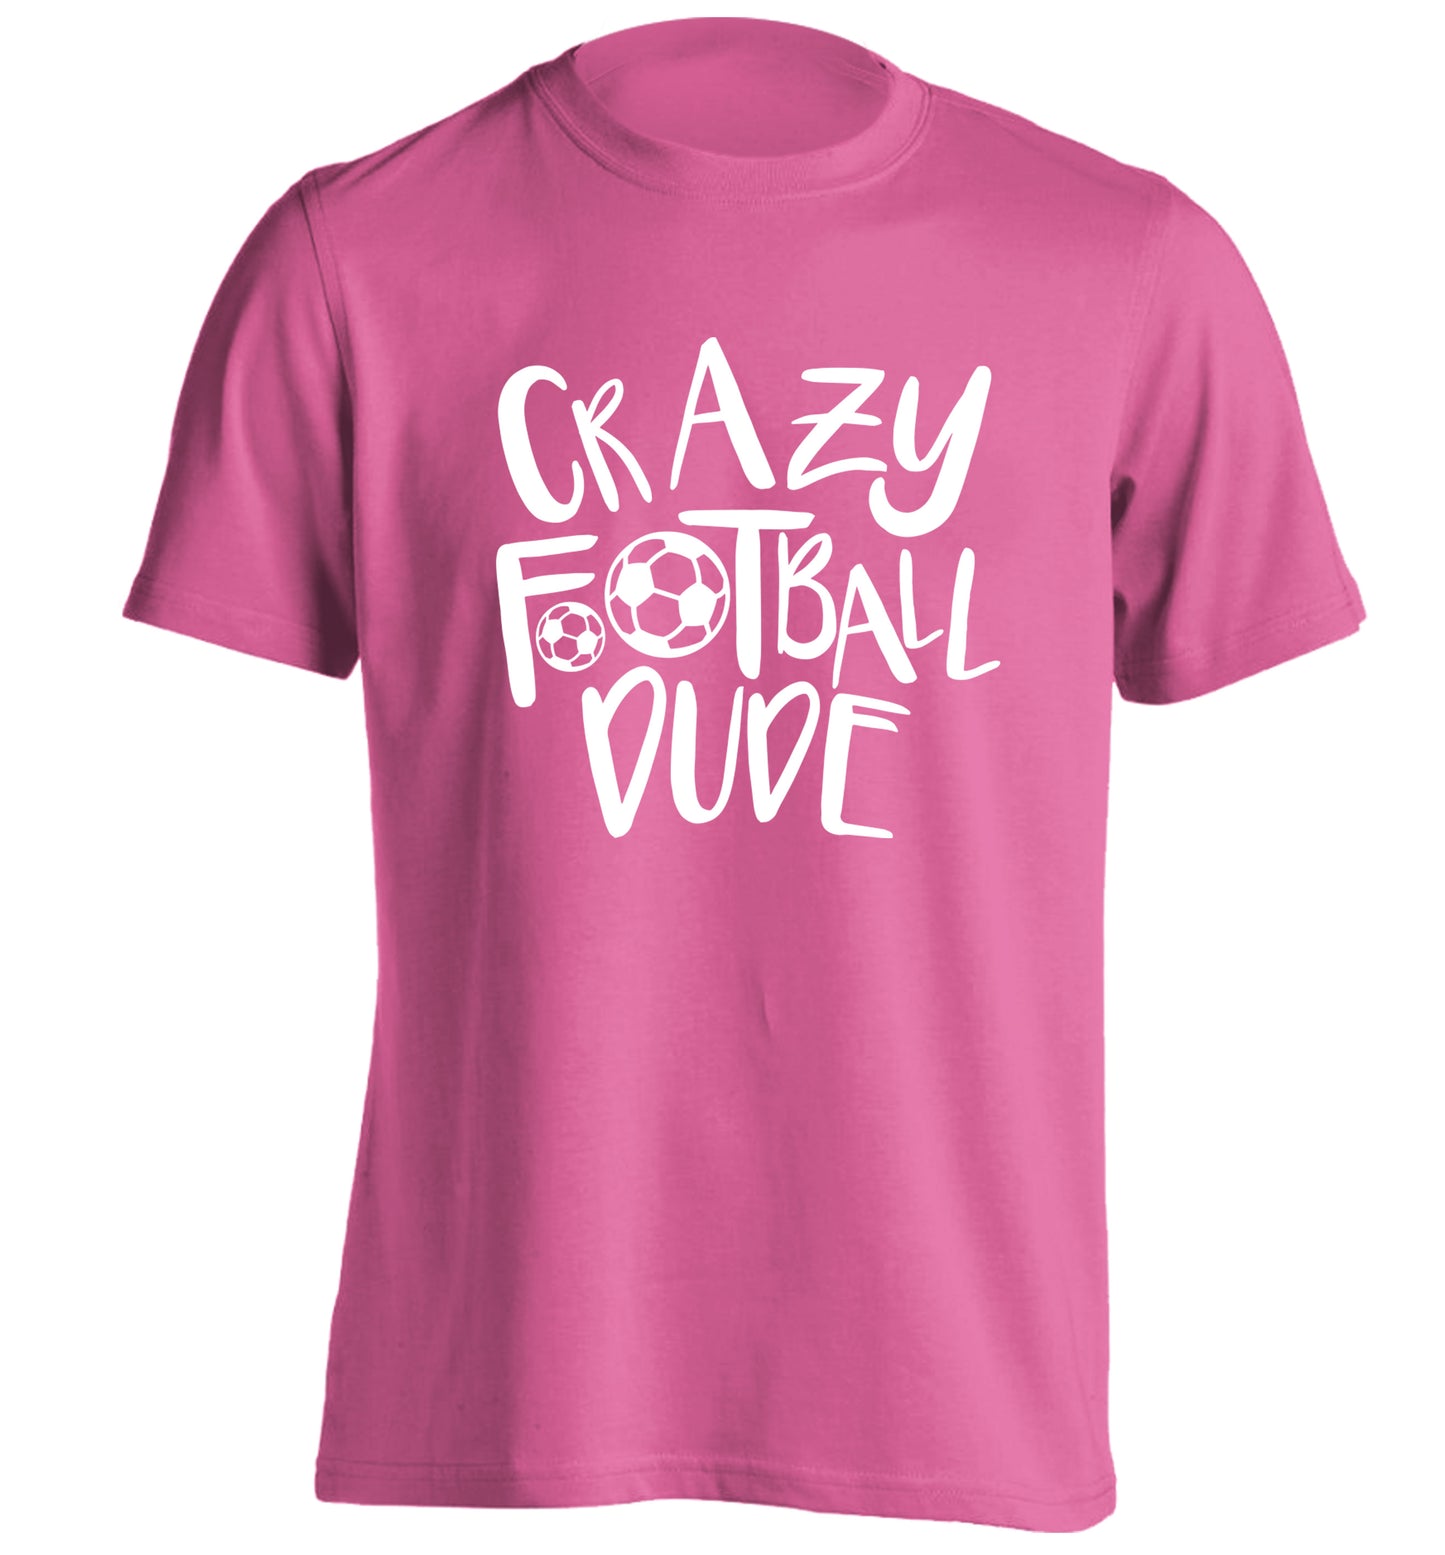 Crazy football dude adults unisexpink Tshirt 2XL